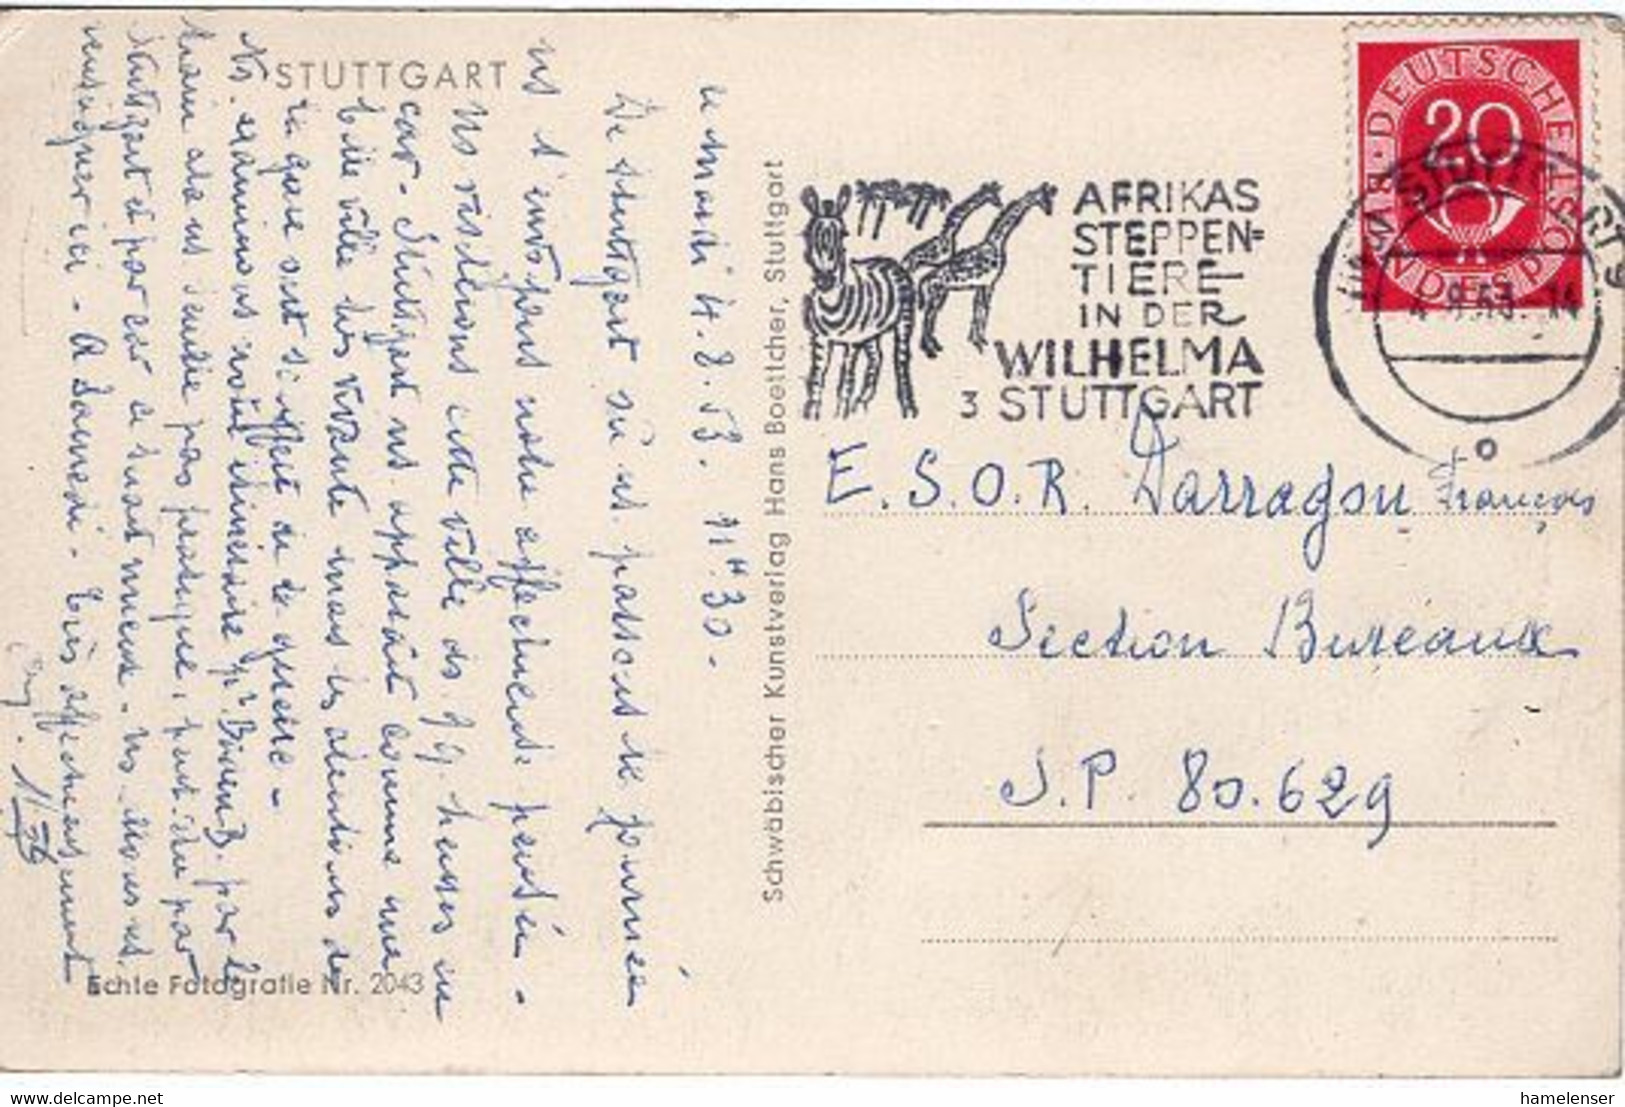 51708 - Bund - 1953 - 20Pfg Posthorn EF A AnsKte STUTTGART - AFRIKAS STEPPENTIERE -> S.P. 80.629 (Frankreich) - Giraffes